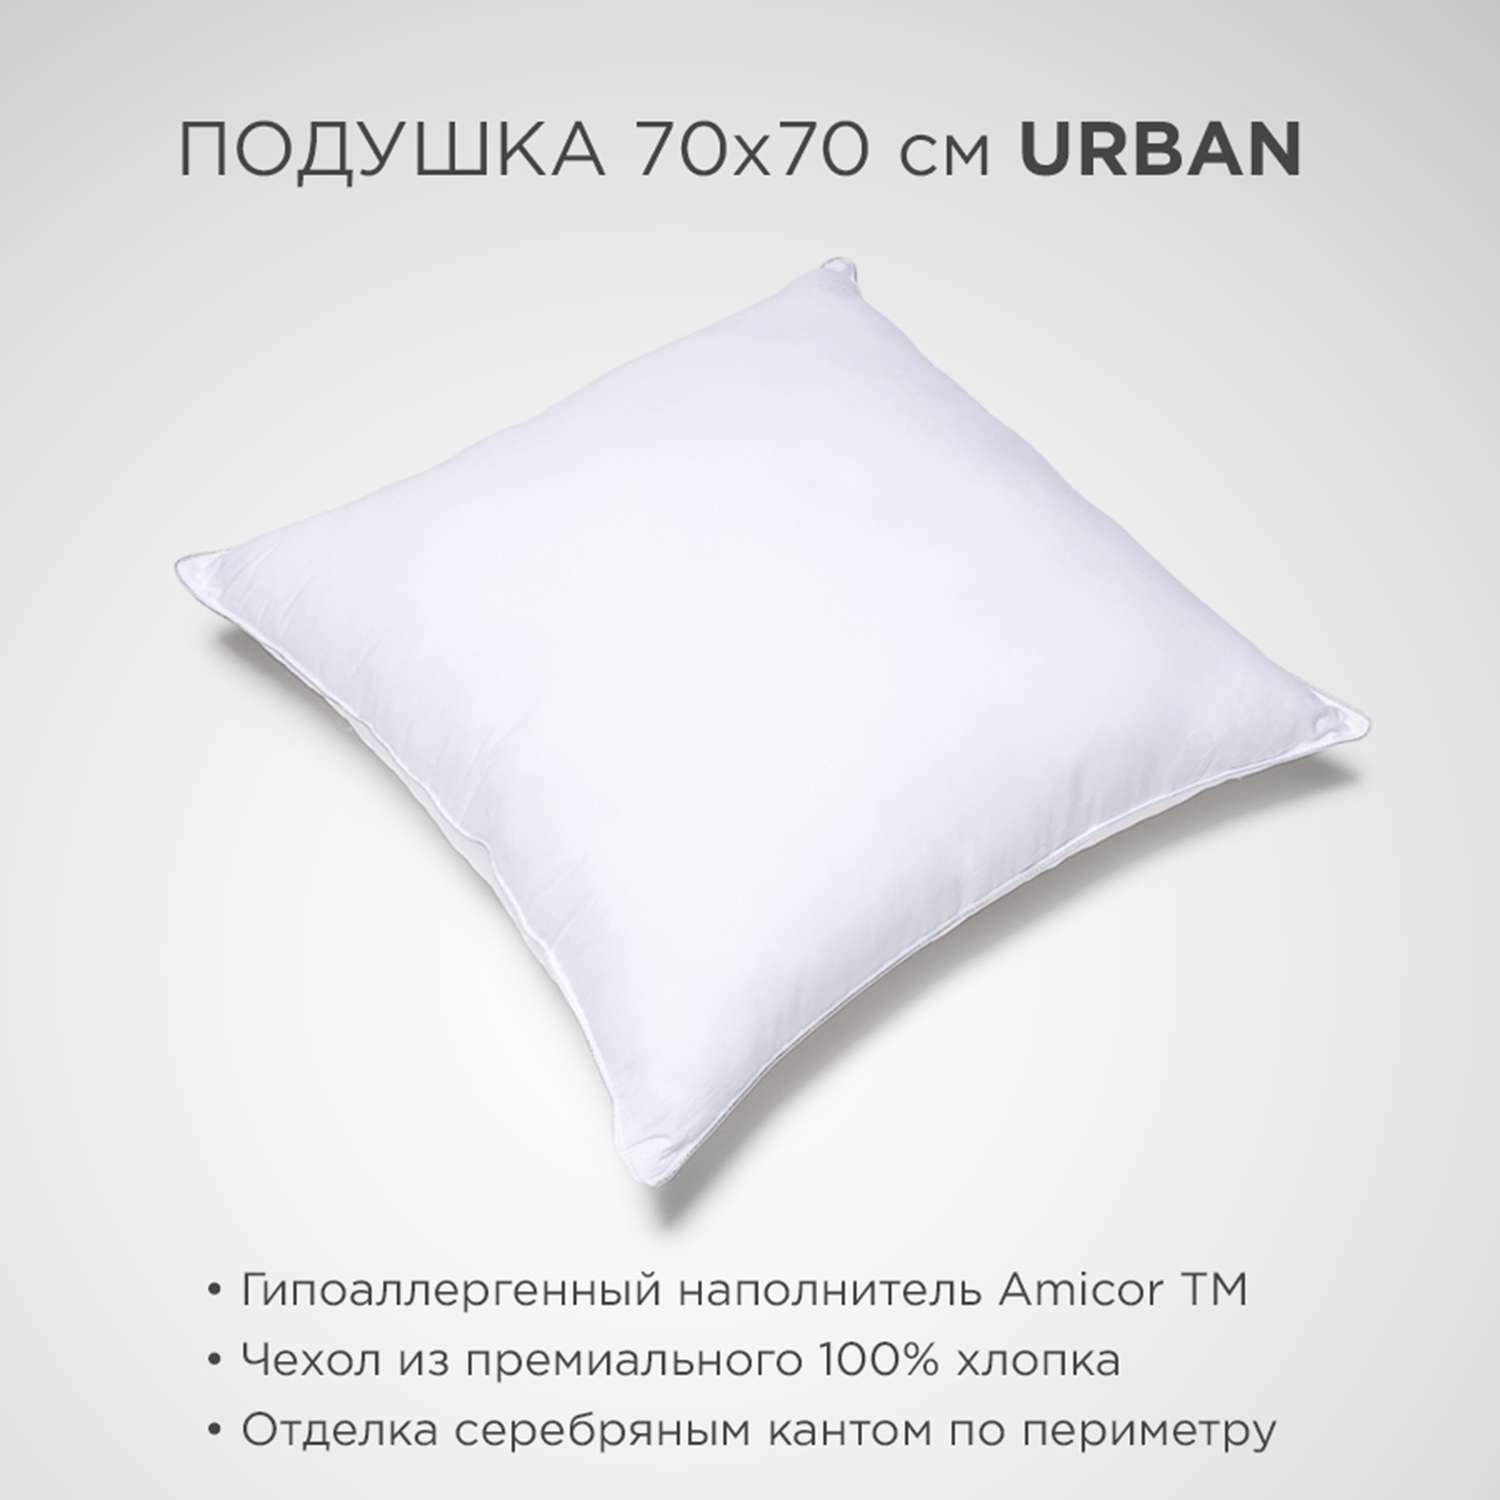 Подушка SONNO Urban Amicor 70x70 см Ослепительно Белый - фото 2